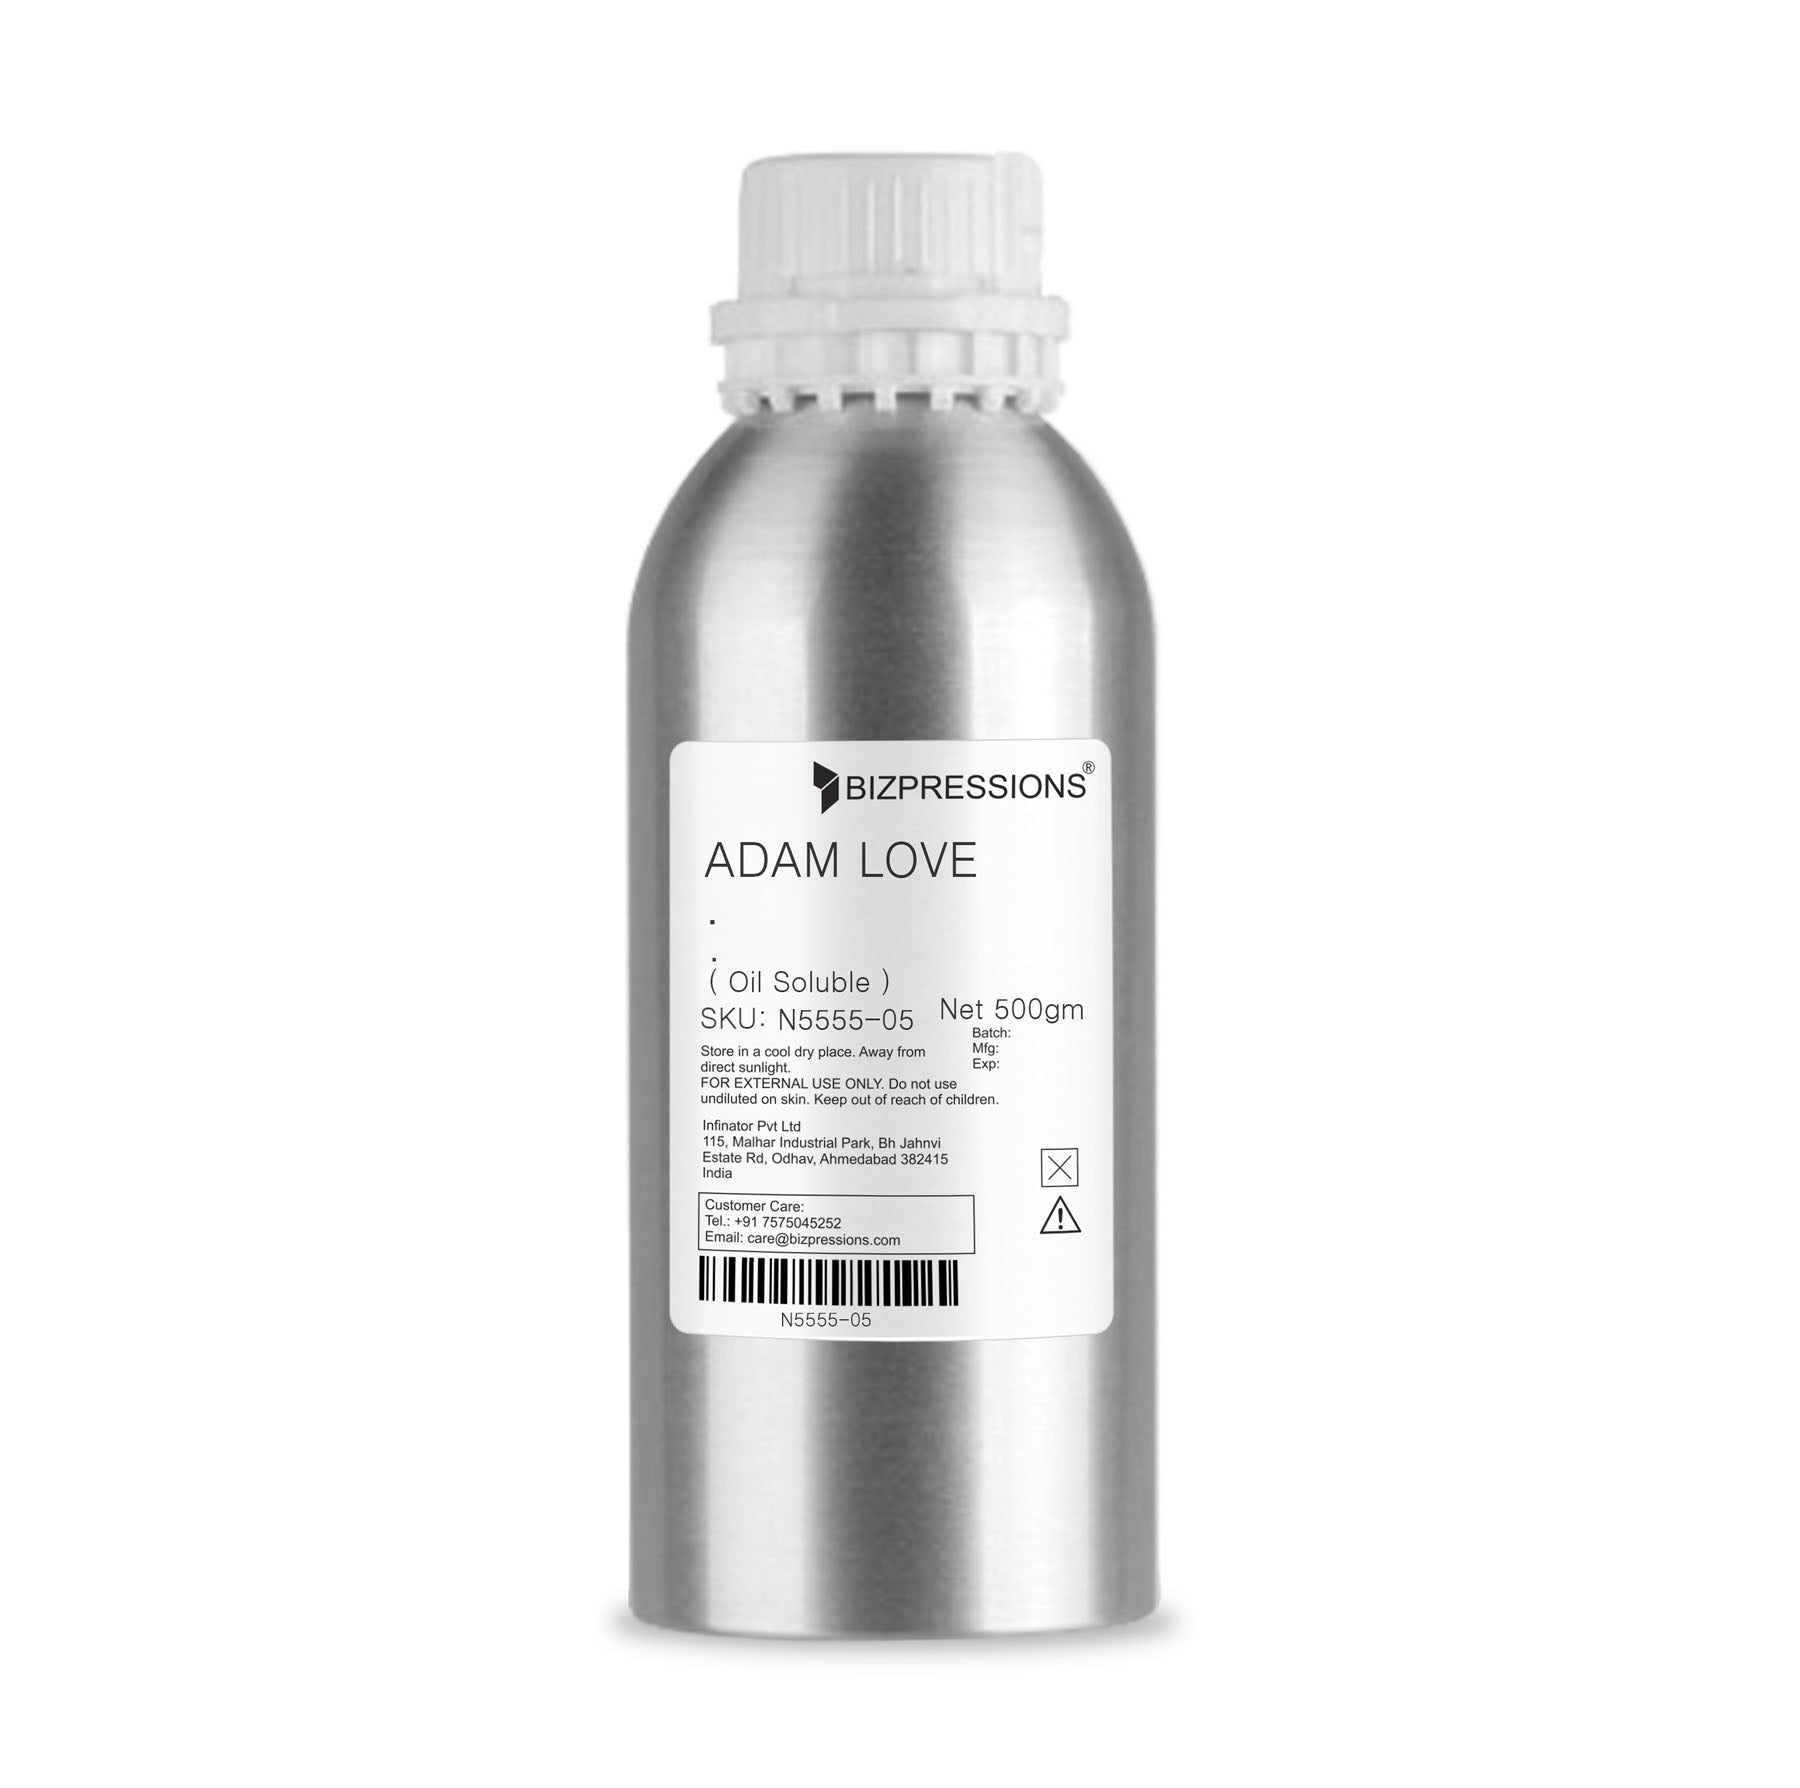 ADAM LOVE - Fragrance ( Oil Soluble ) - 500 gm